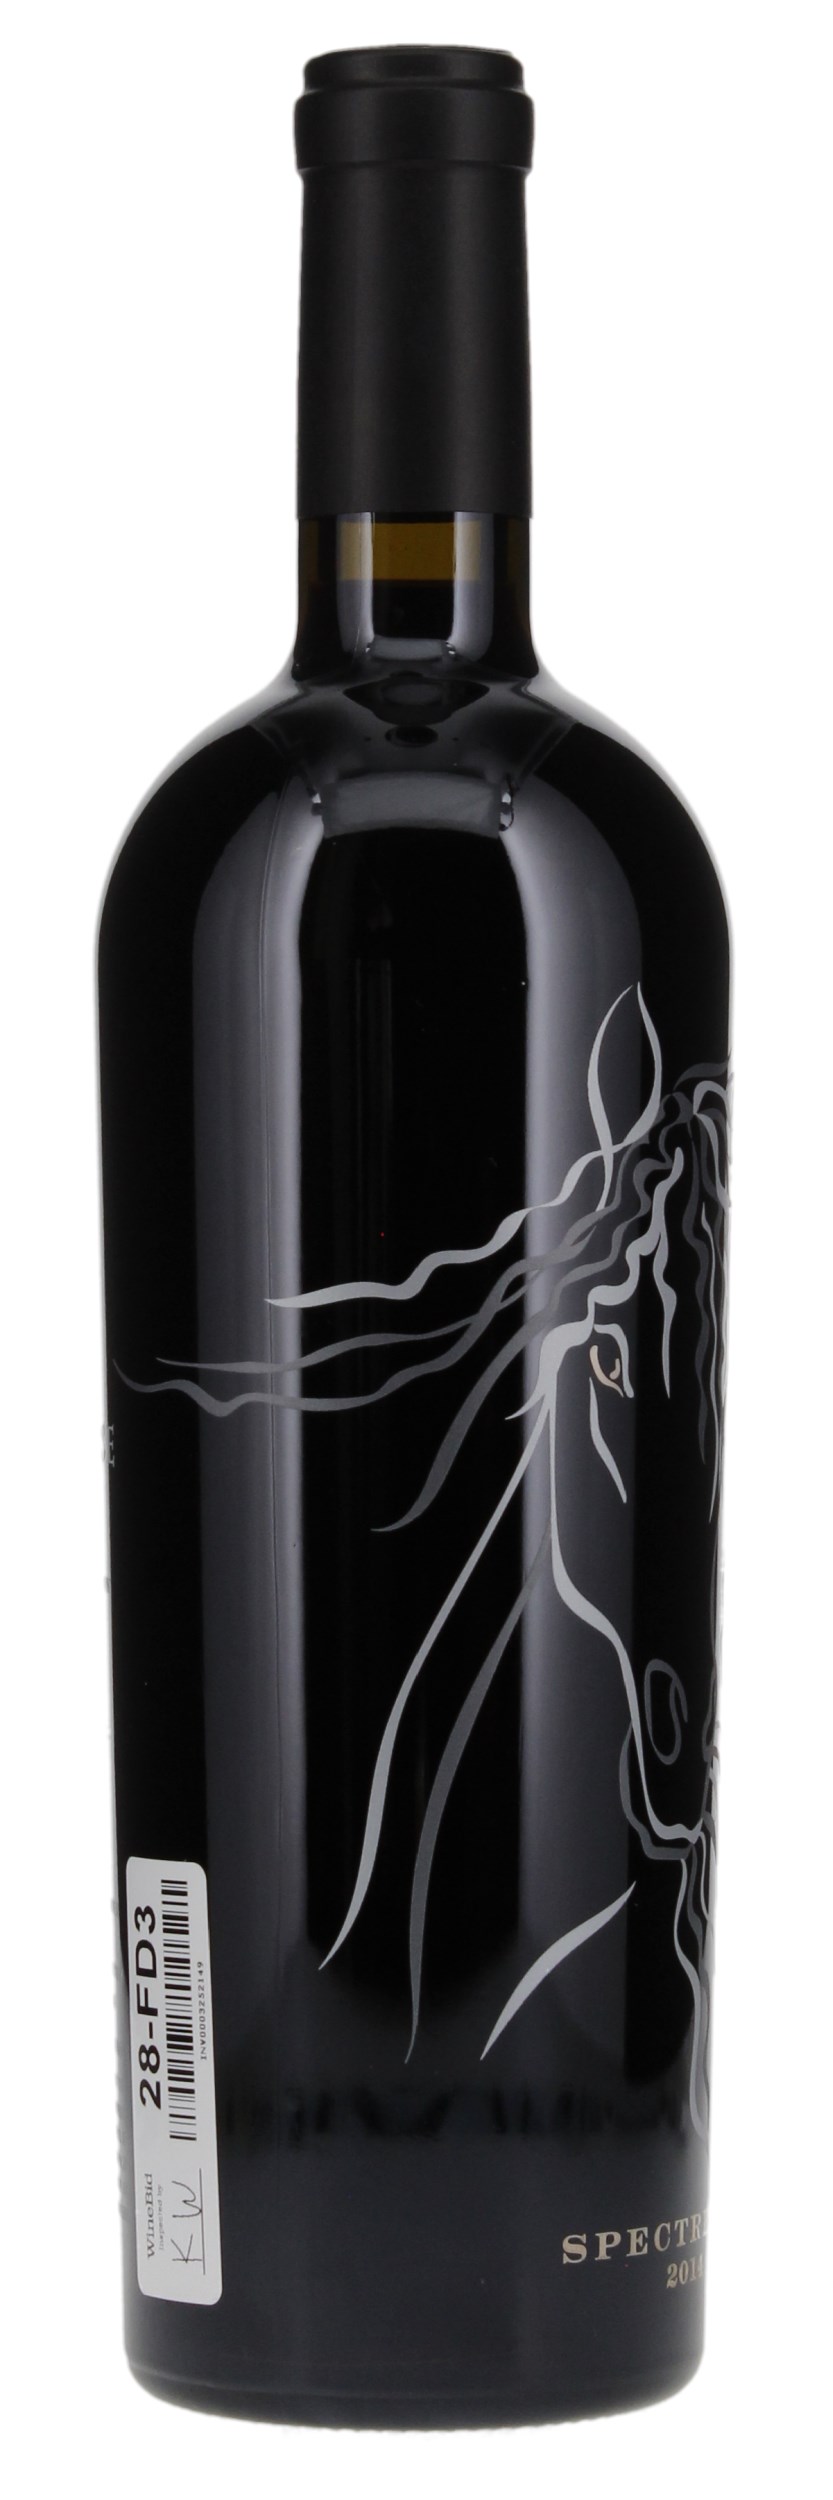 2014 Ghost Horse Vineyard Spectre Cabernet Sauvignon, 750ml